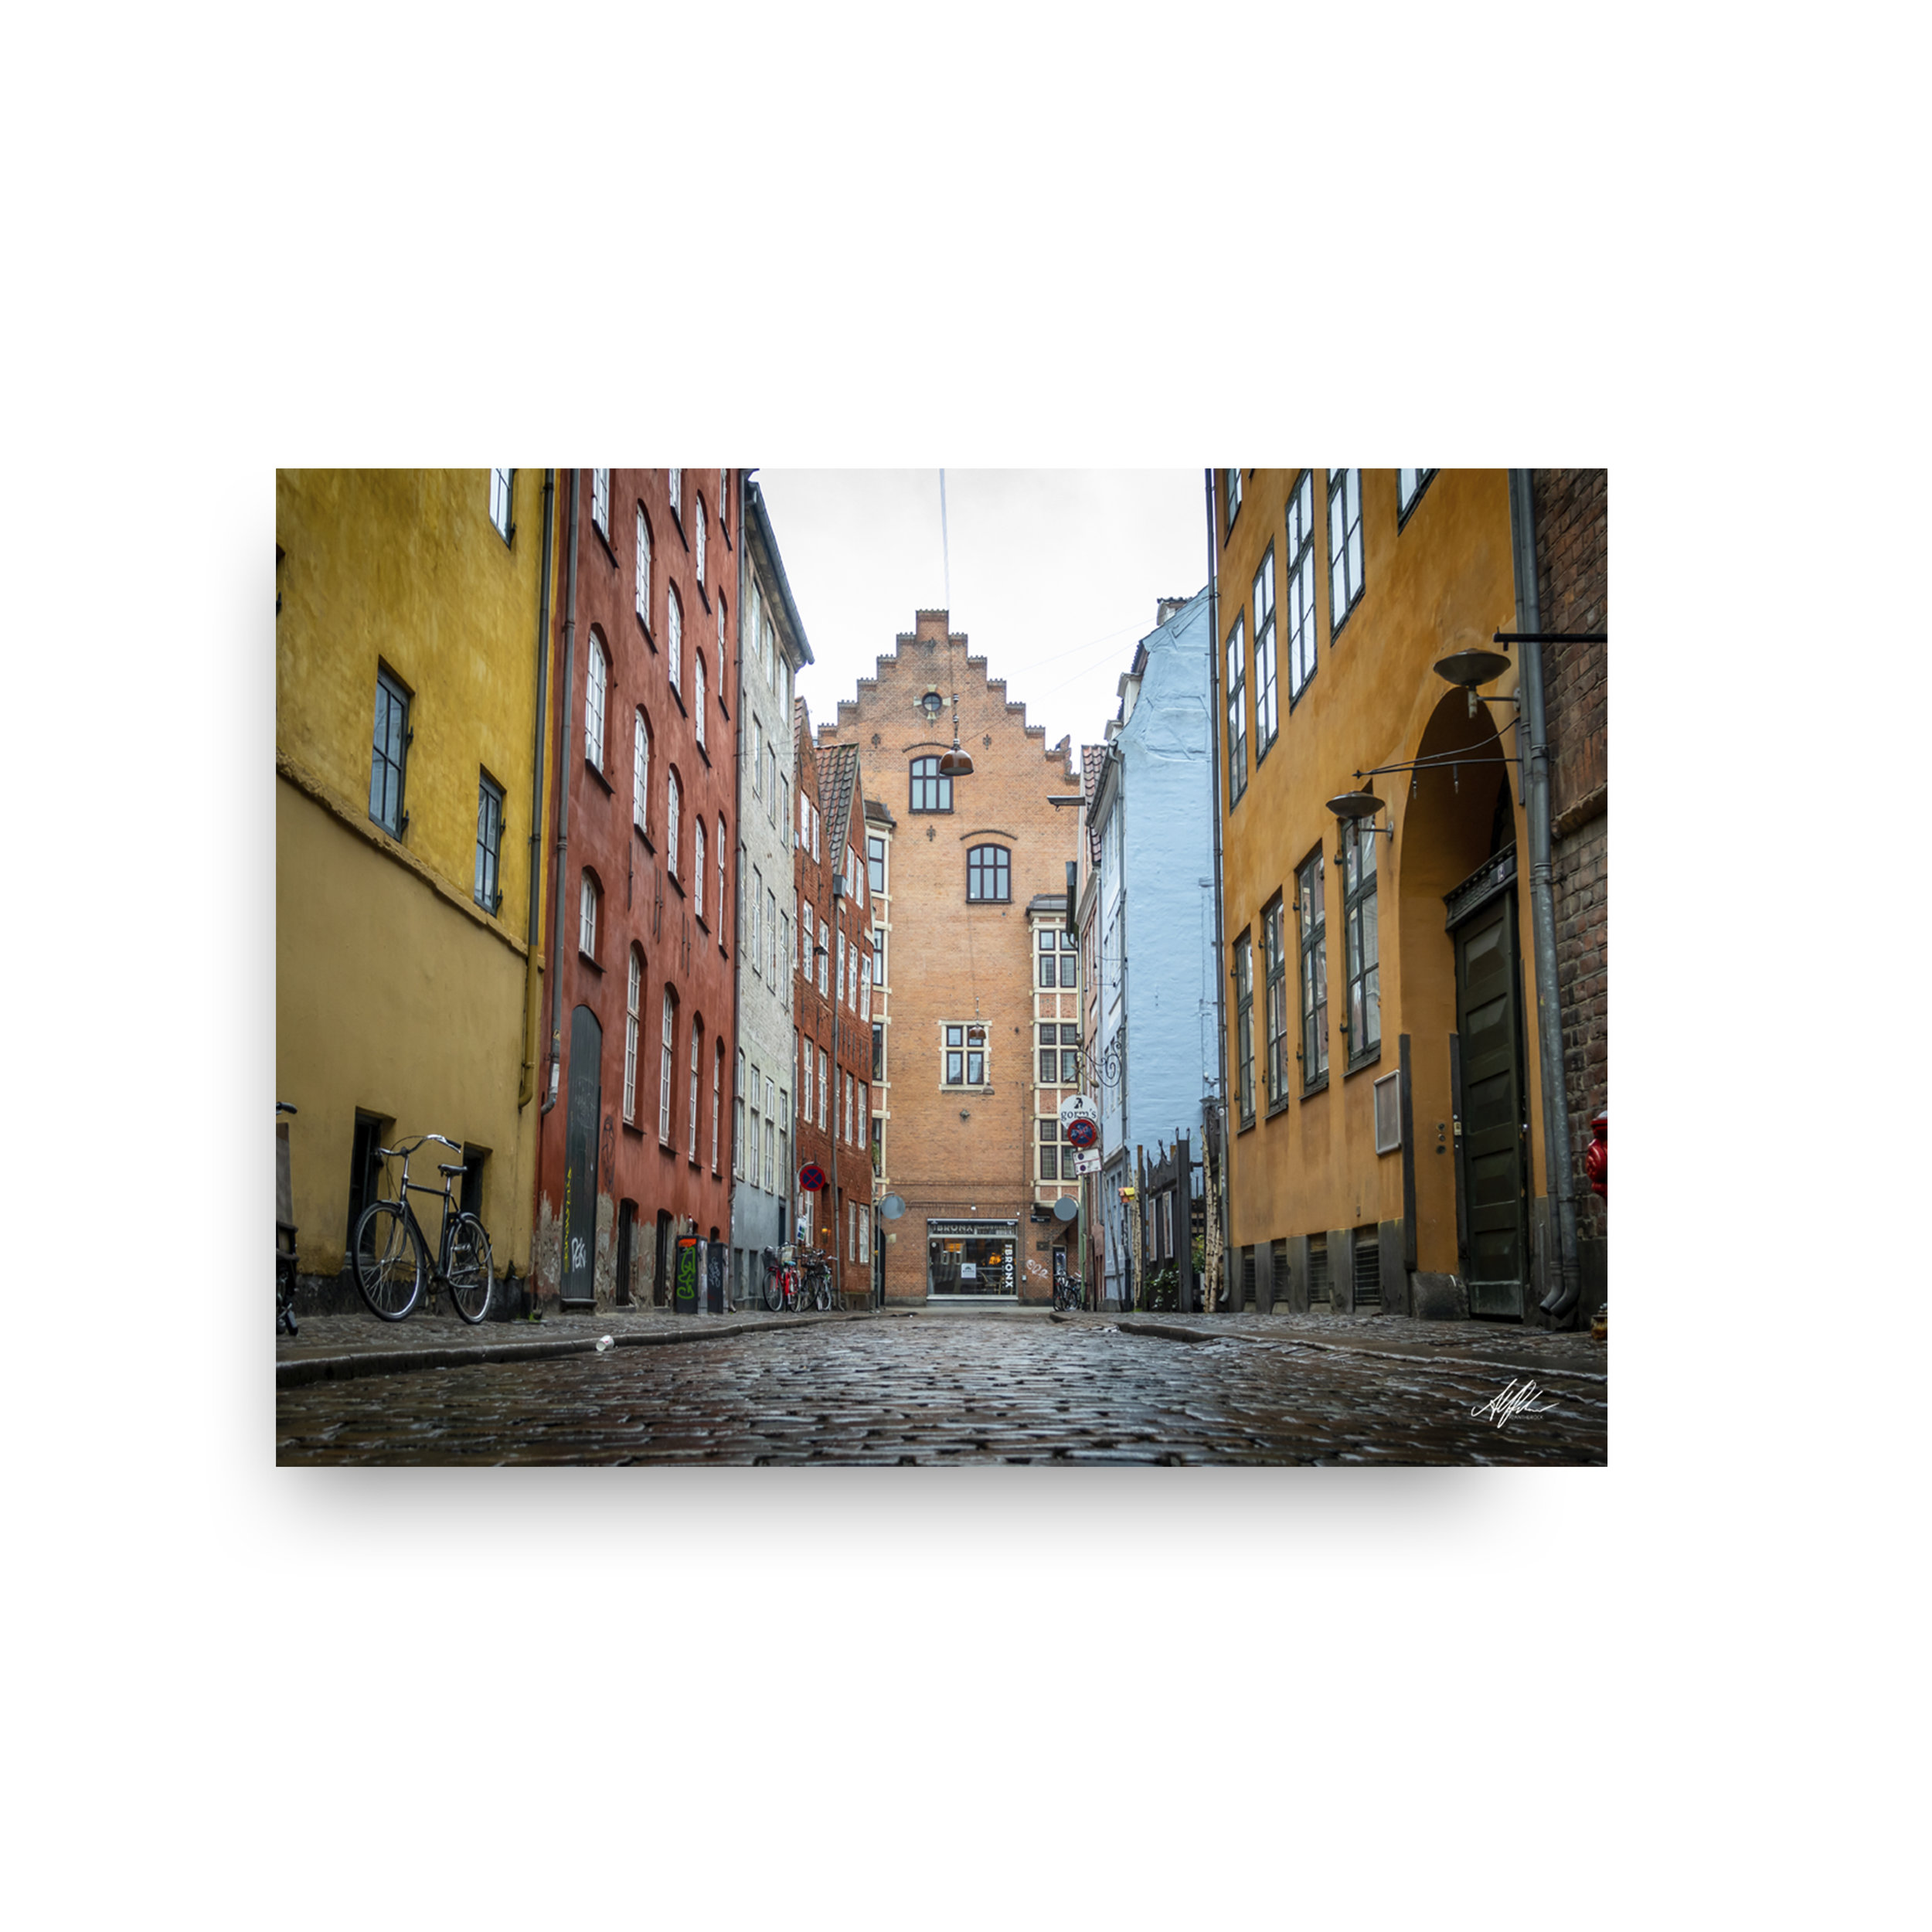 Calles estrechas de Copenhague - Alantherock